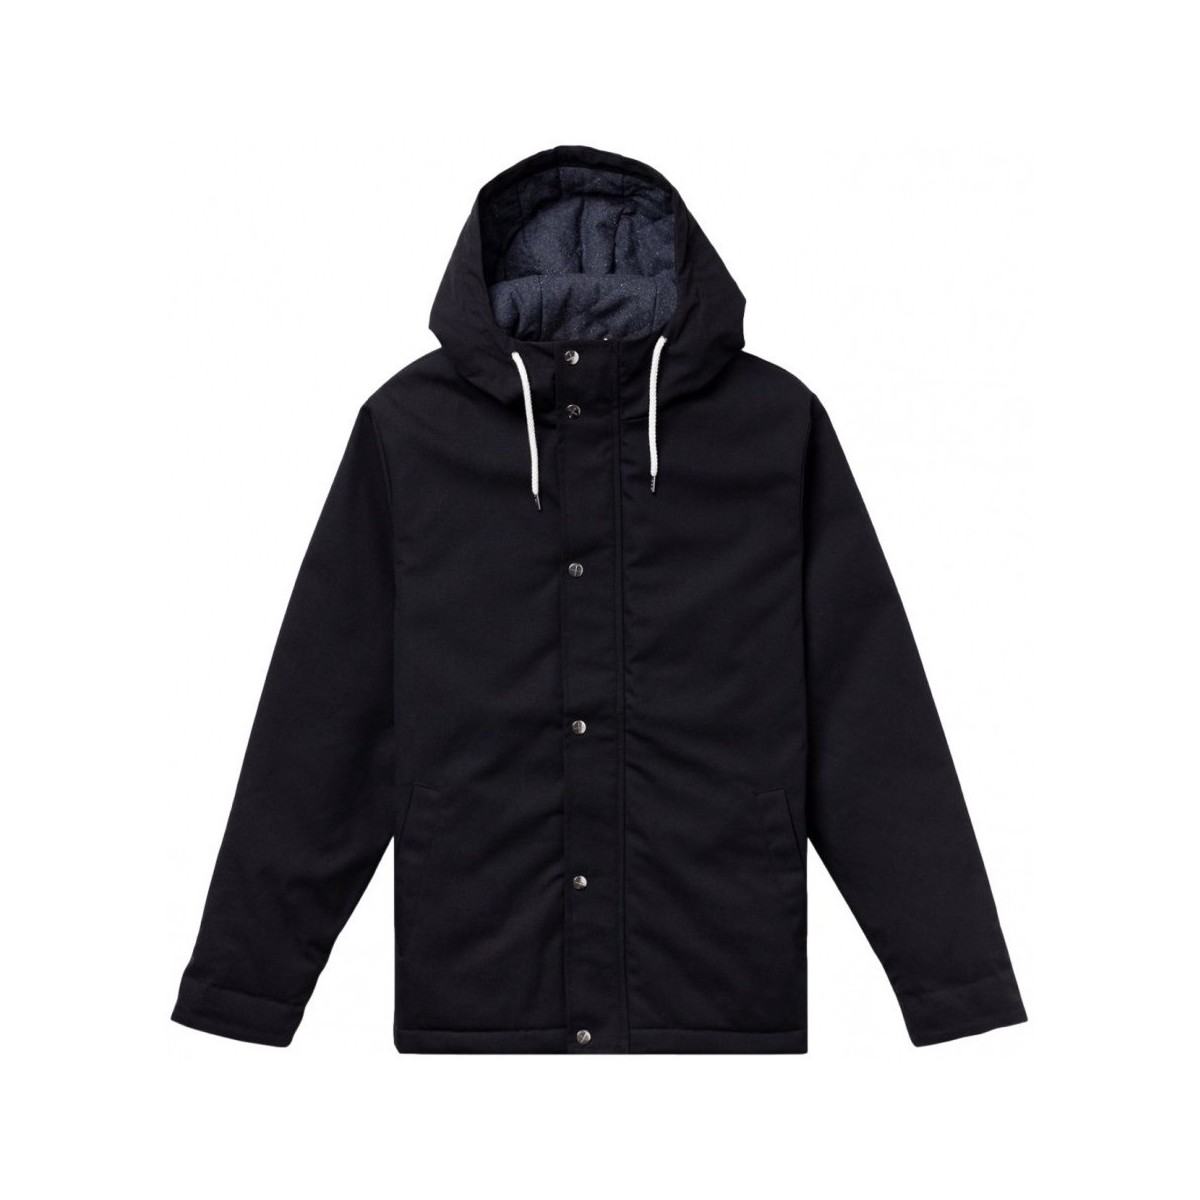 textil Hombre Abrigos Revolution Hooded Jacket 7311 - Black Negro